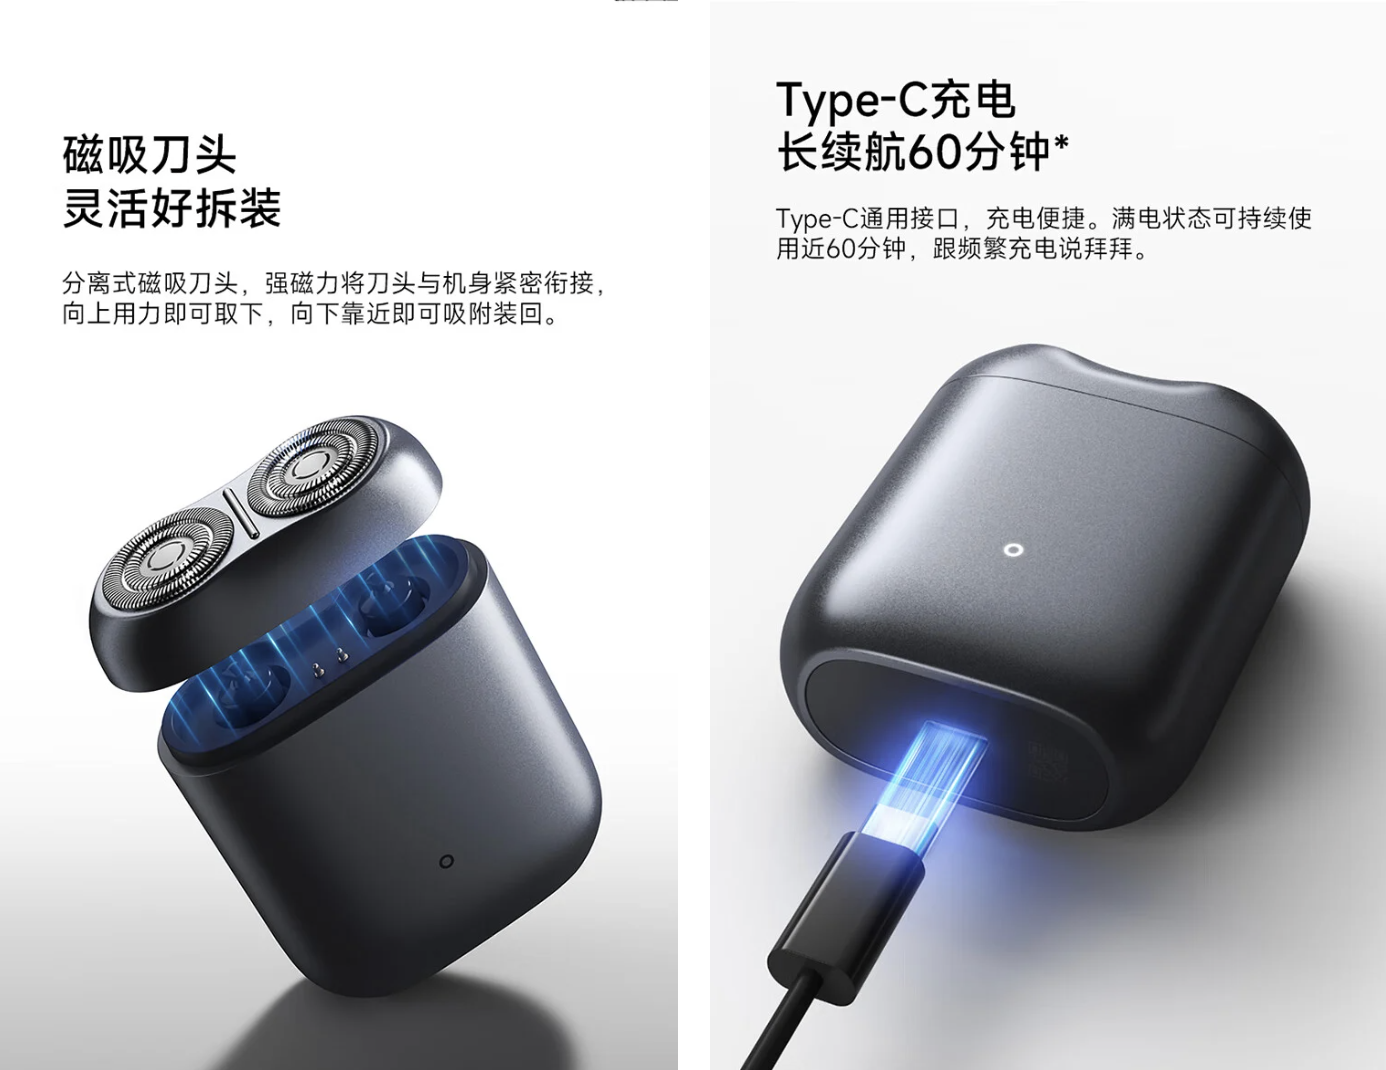 Xiaomi представила недорогую карманную электробритву1